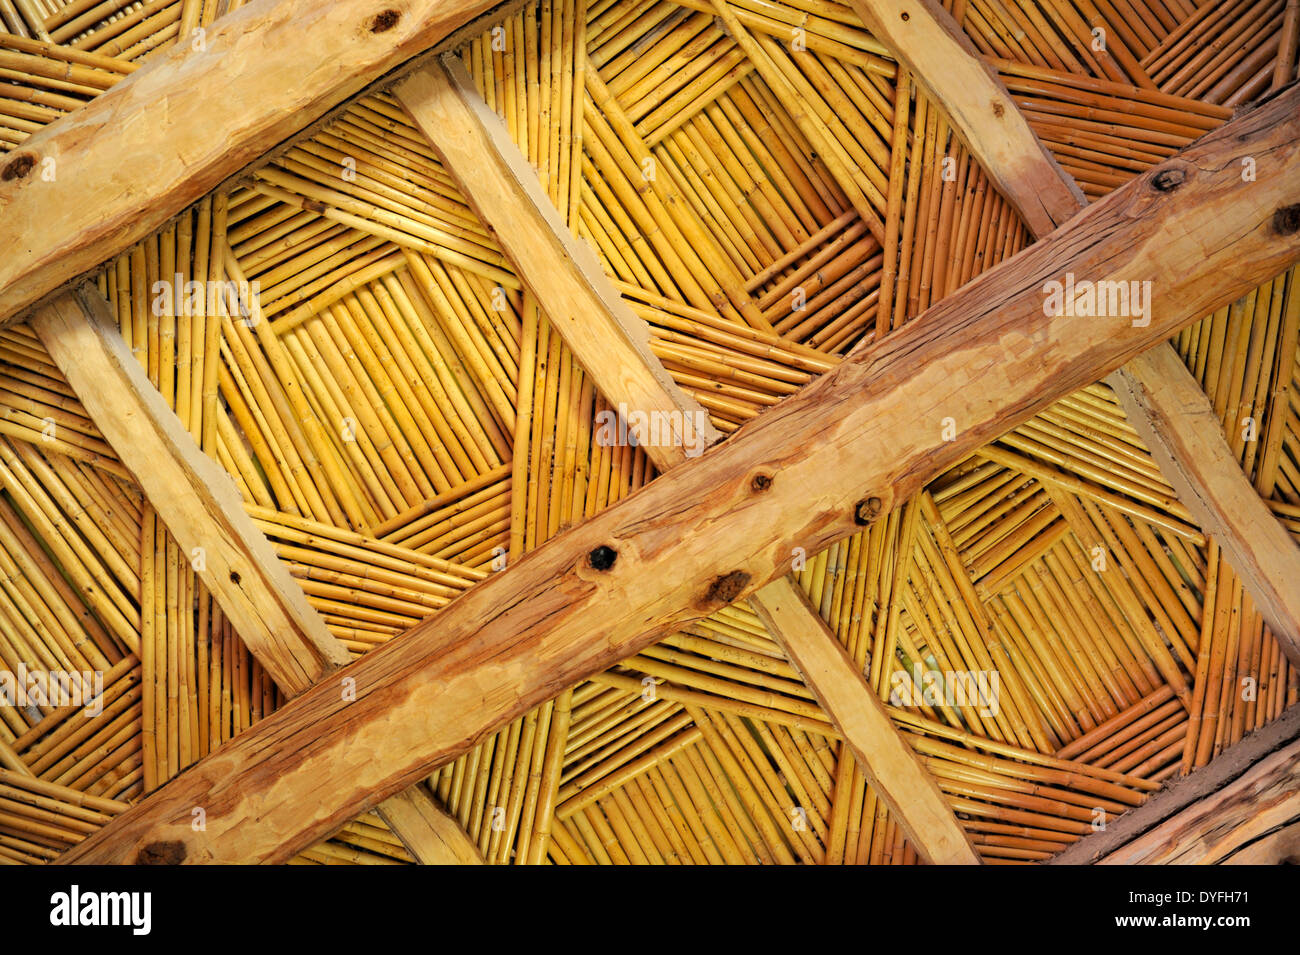 A canne di bambù appesi al soffitto a strutture da esterno Foto stock -  Alamy